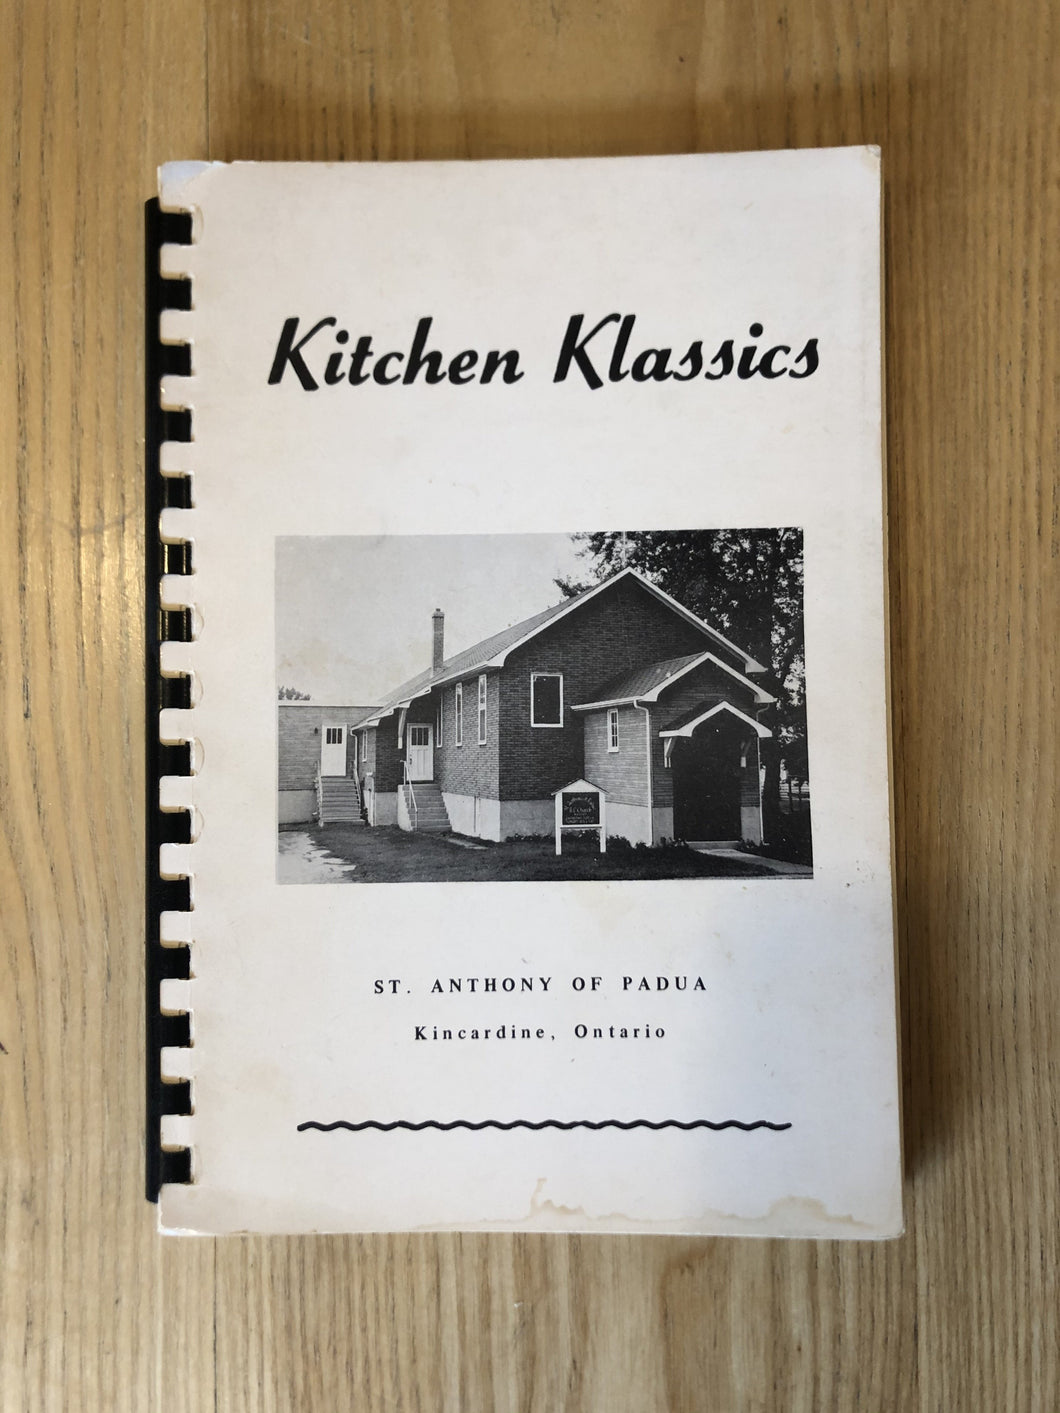 Kitchen Klassics, St. Anthony of Padua in Kincardine, Ontario